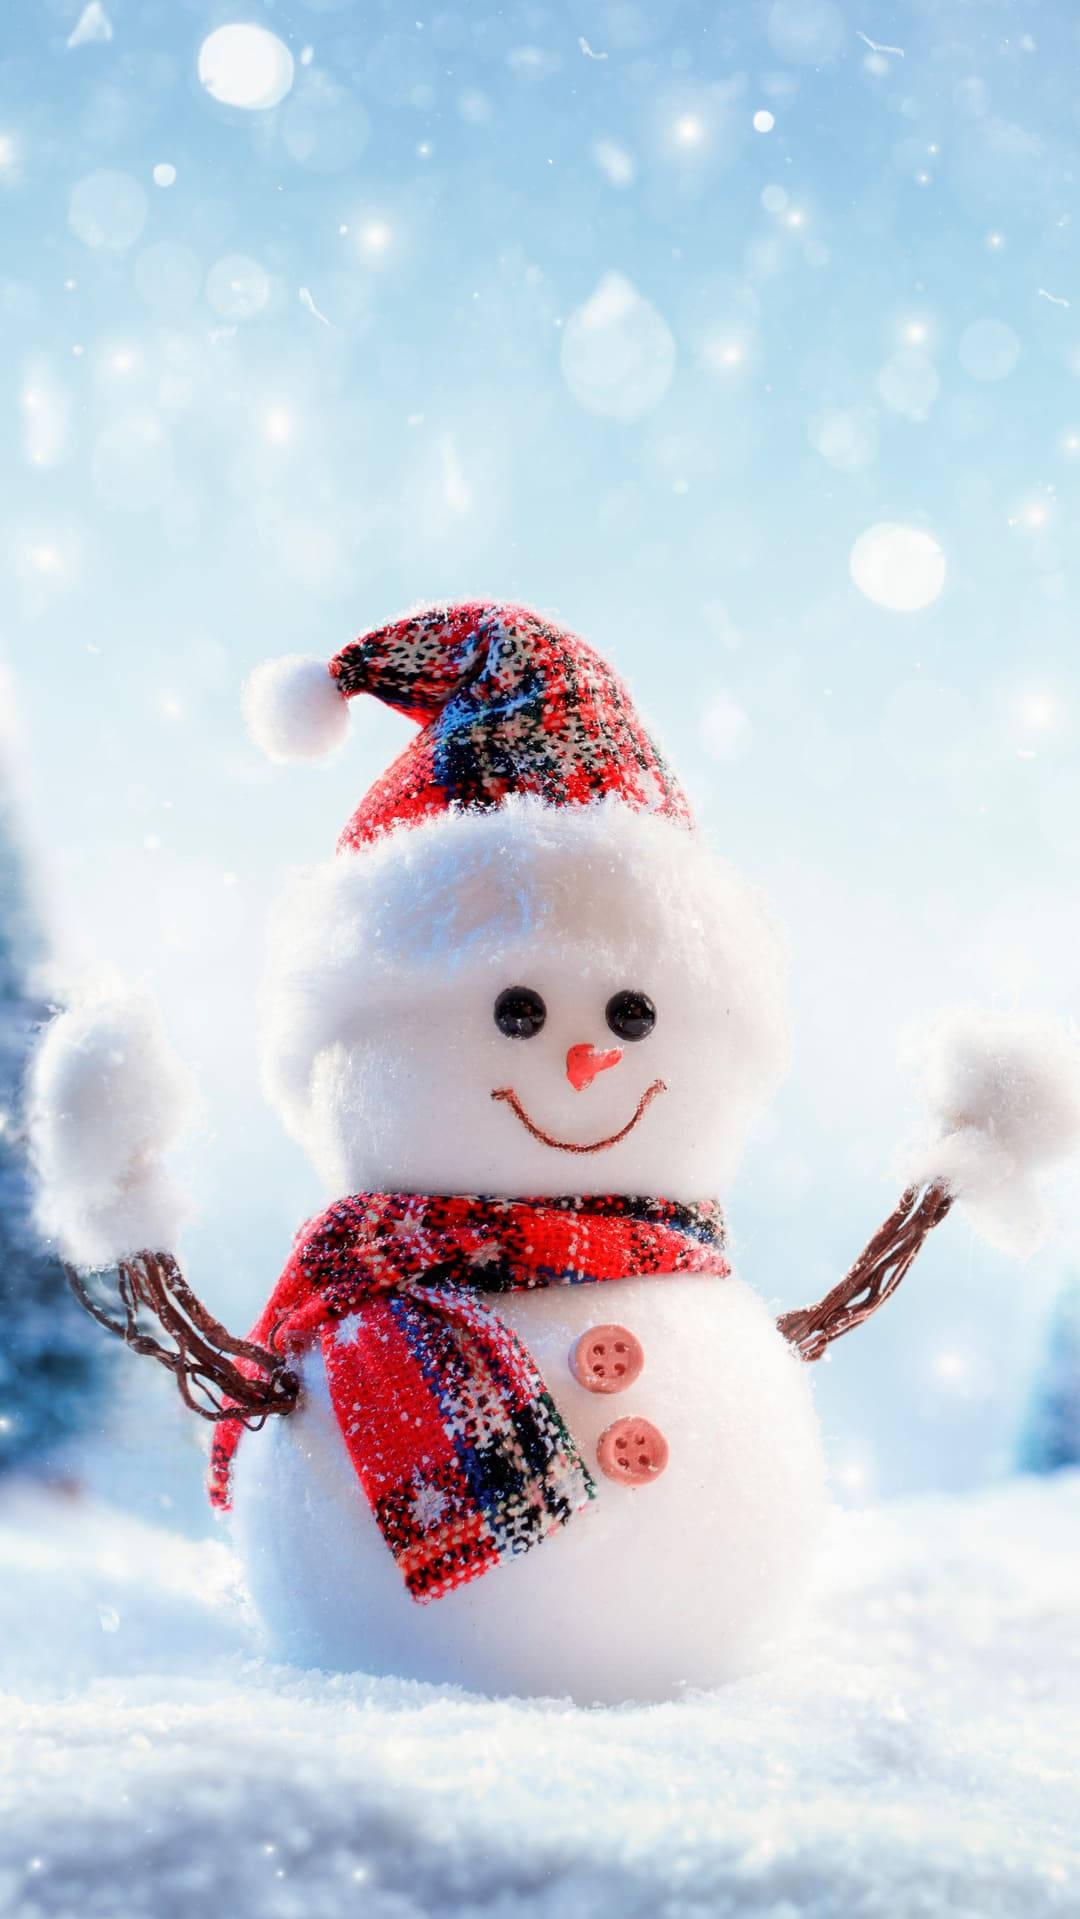 Download Cute Snowman Winter iPhone Wallpaper